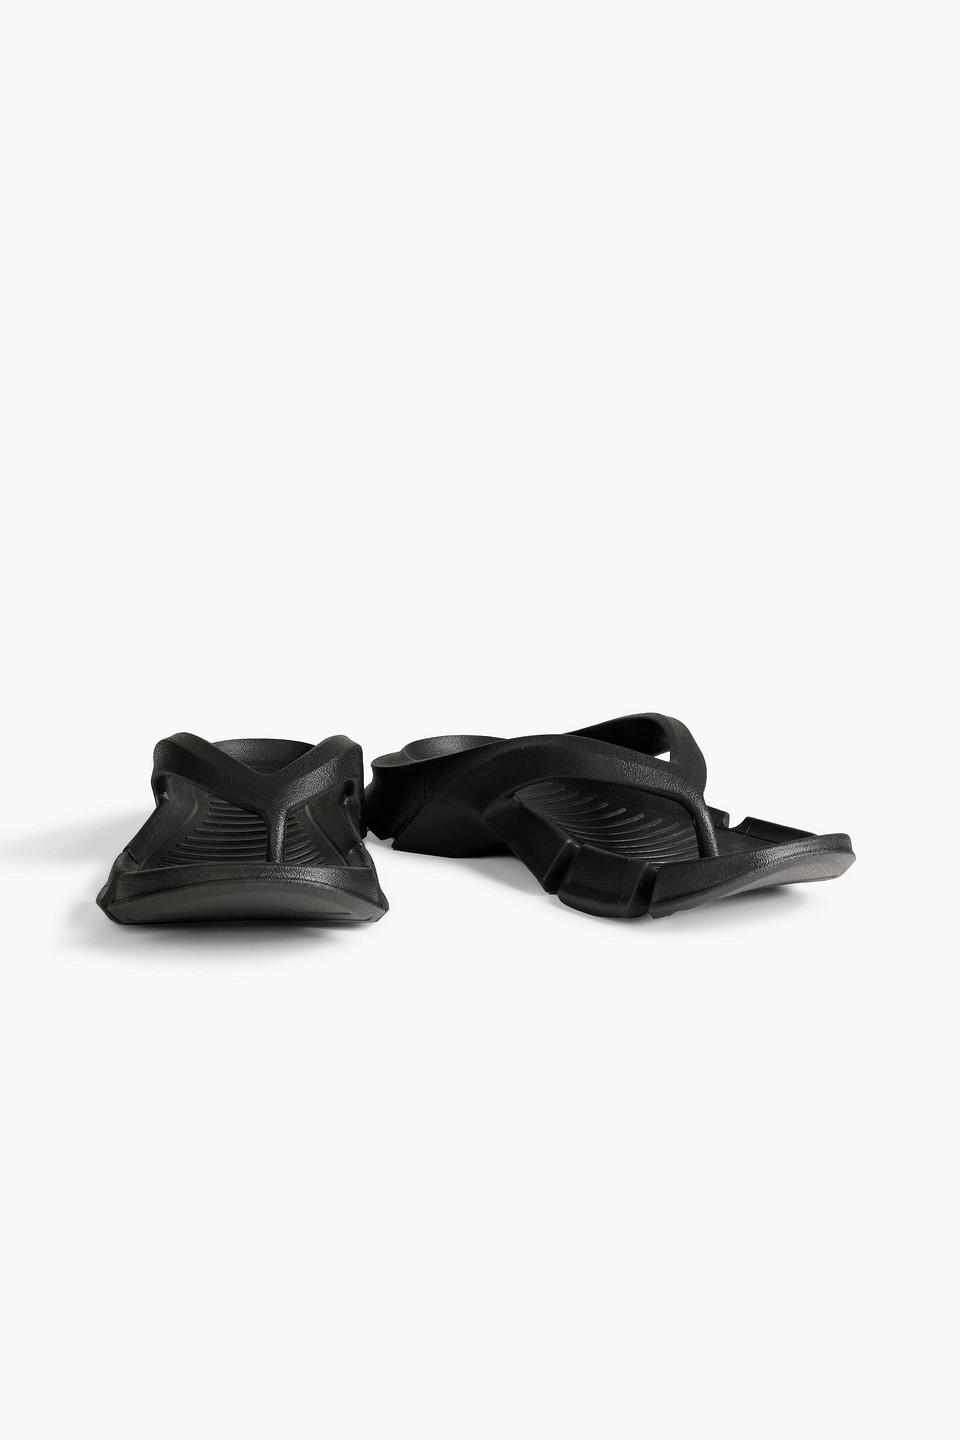 Balenciaga Mold Rubber Flip Flops in Black | Lyst